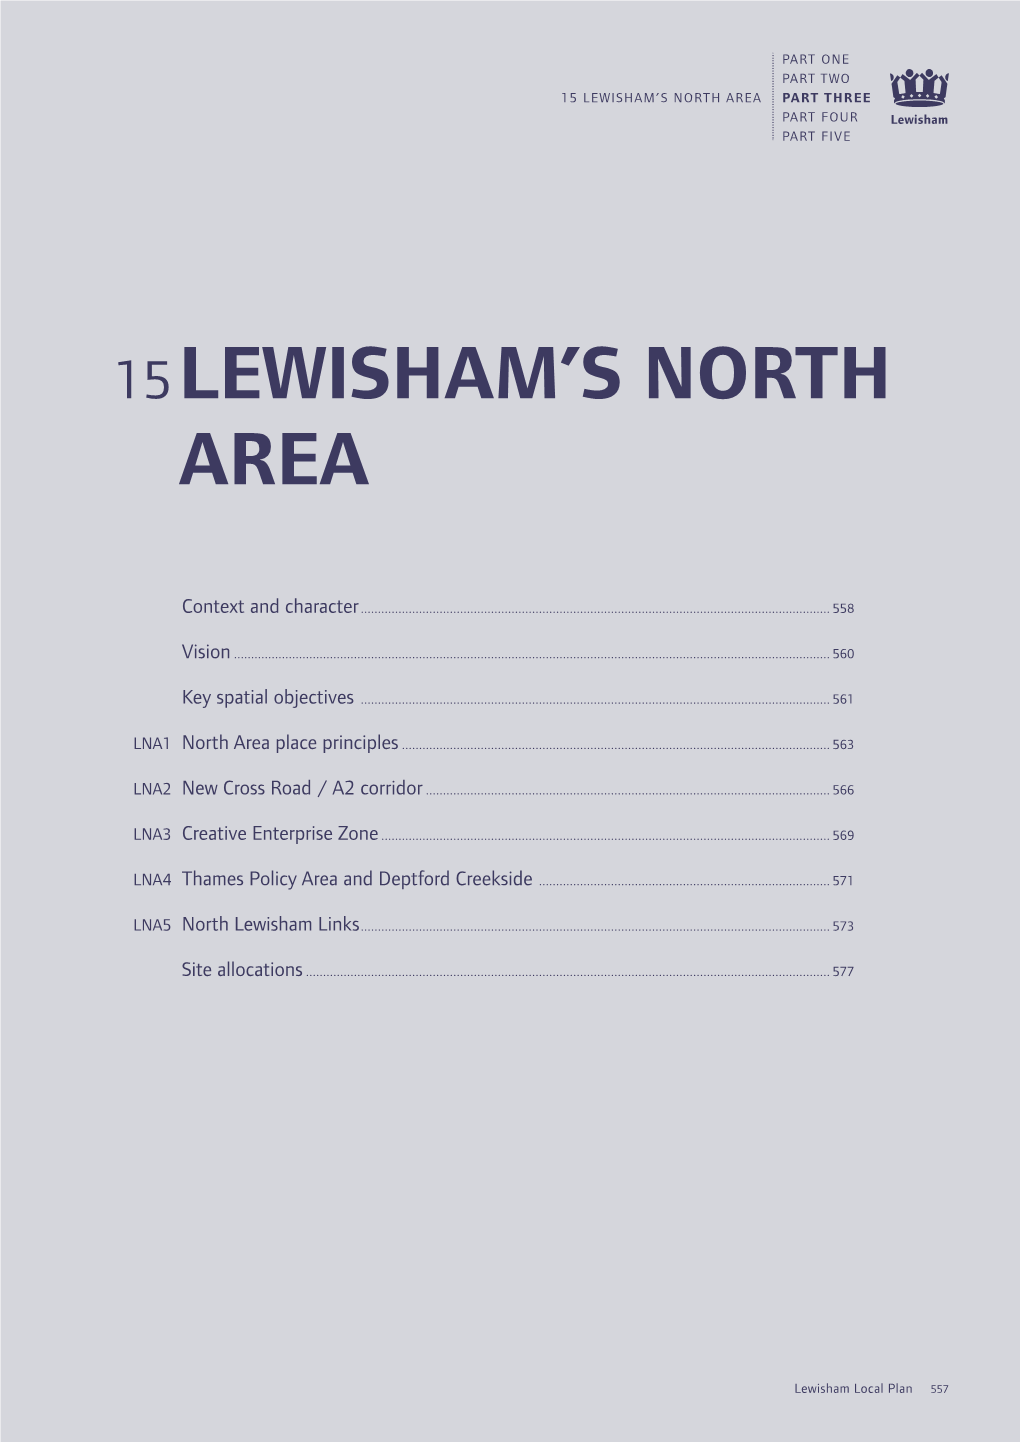 Lewisham Local Plan 557 Context and Character